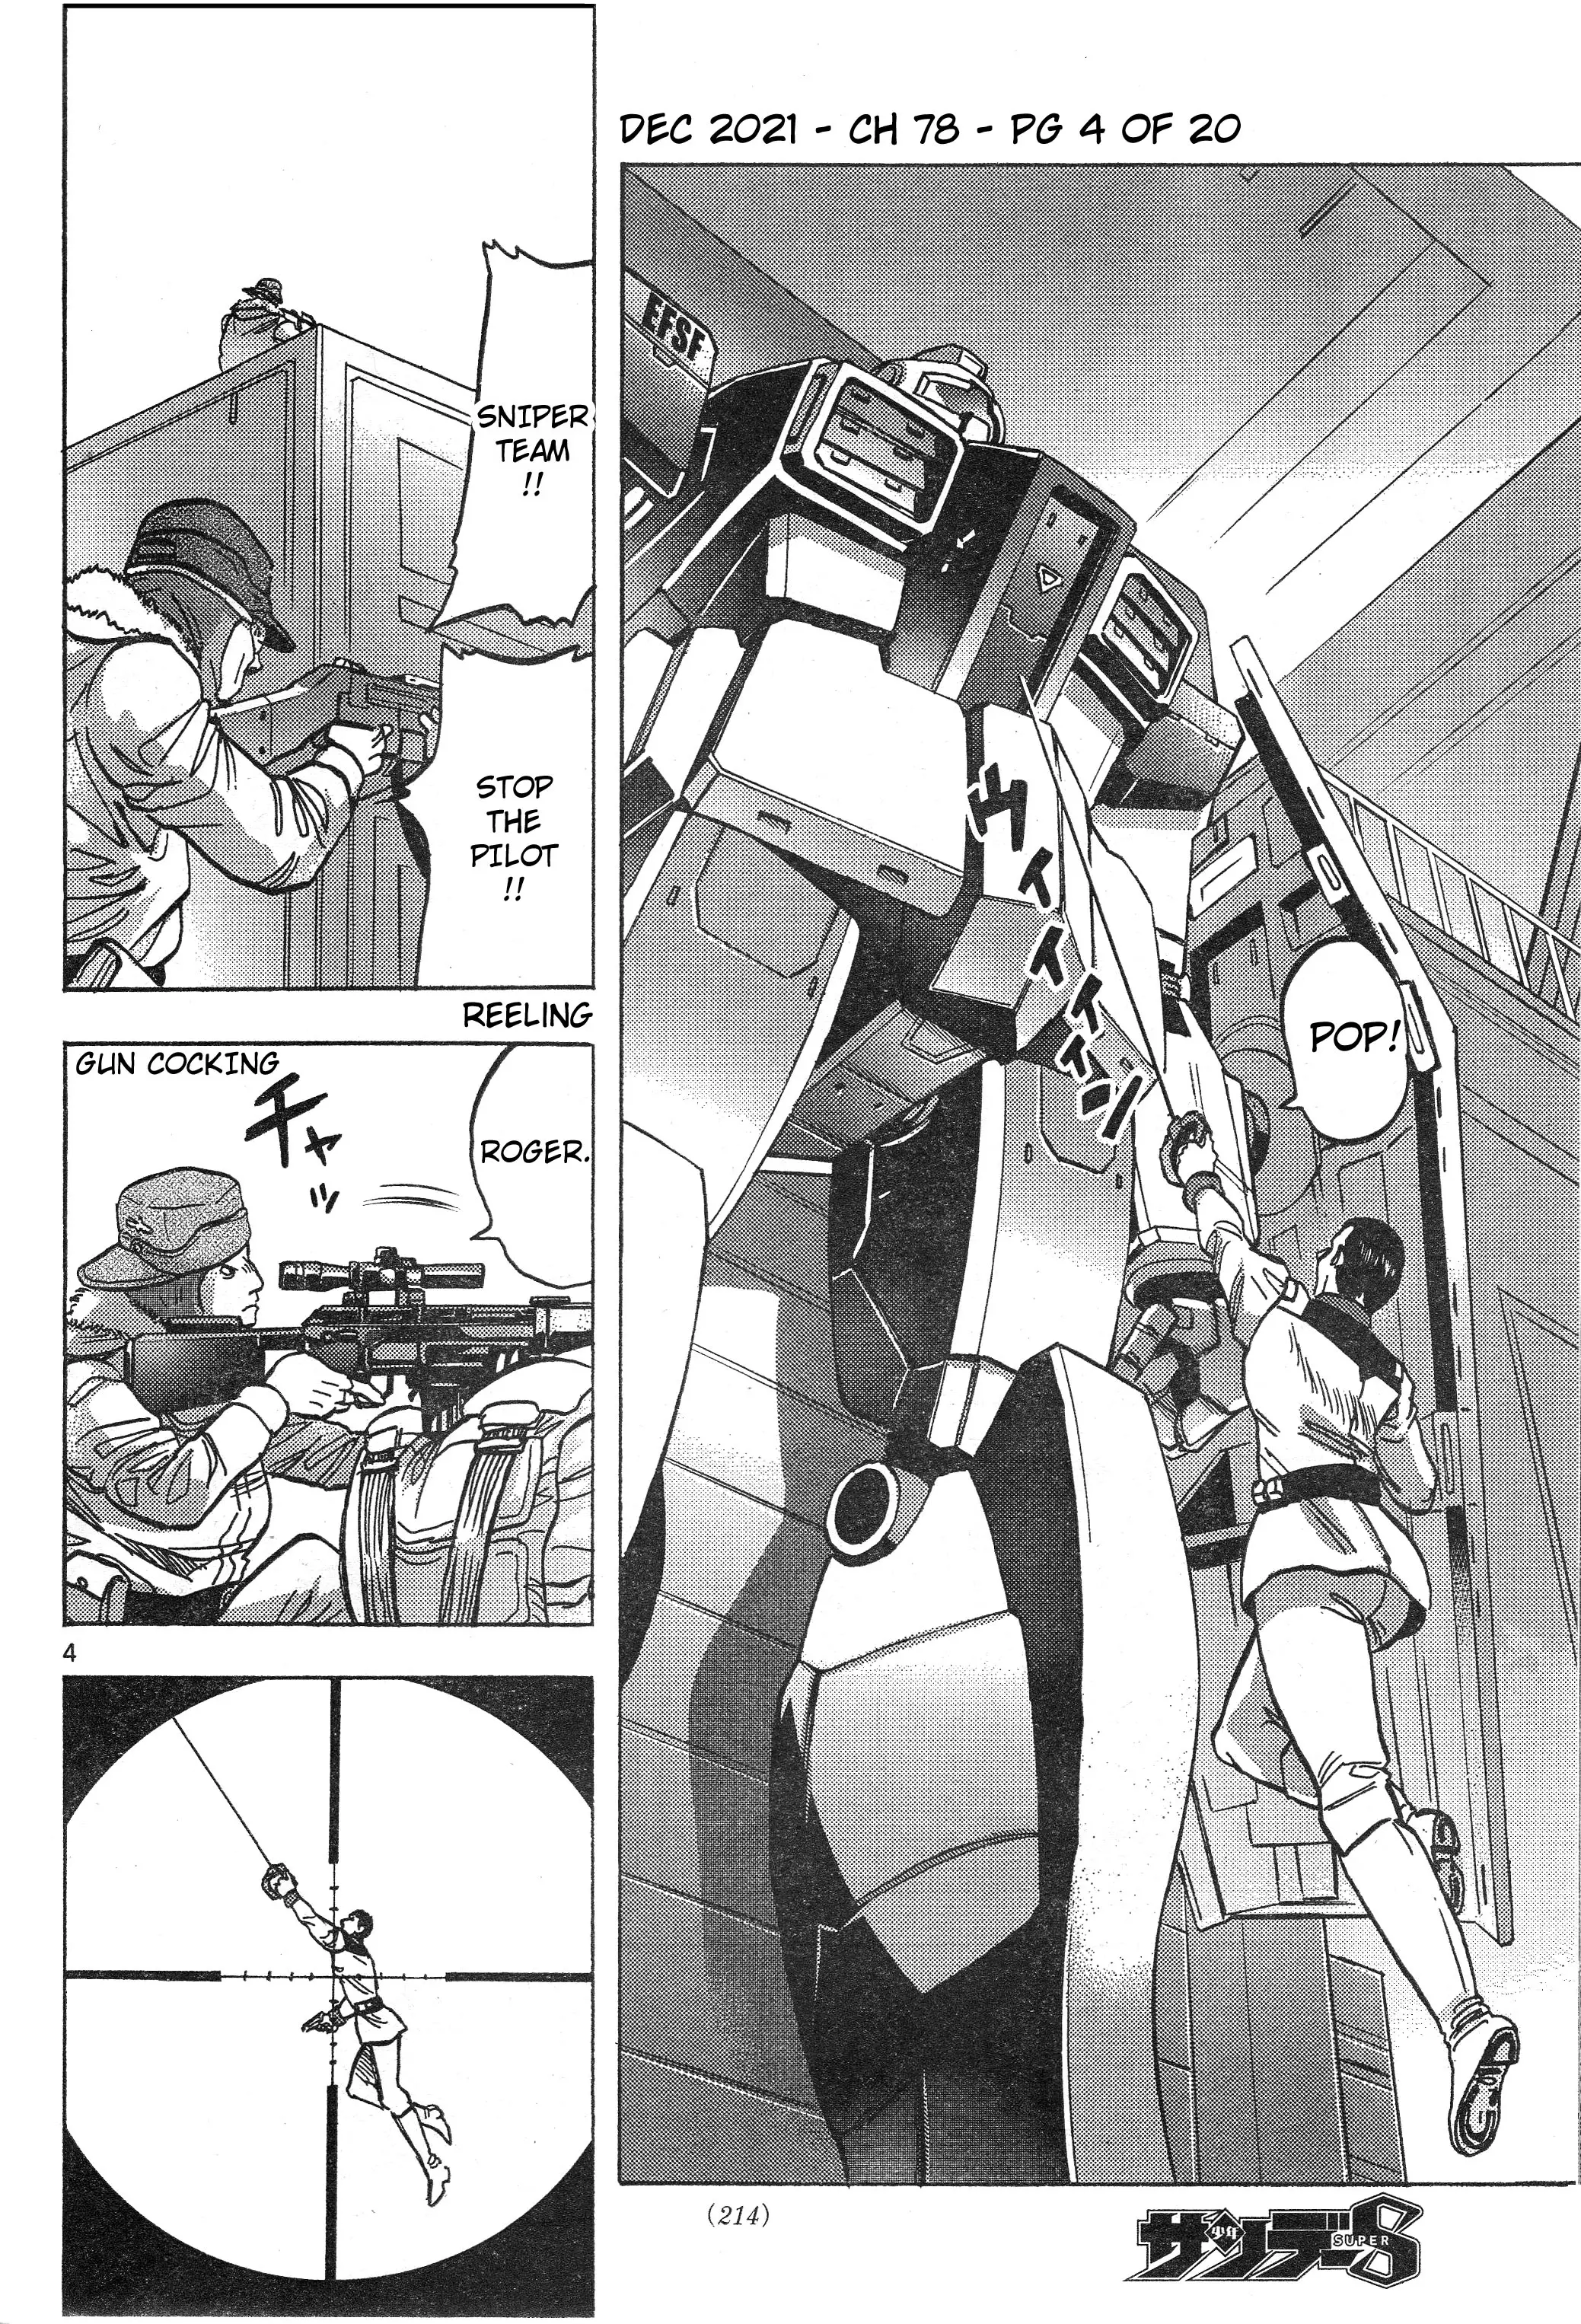 Mobile Suit Gundam Aggressor - 78 page 4-07770156